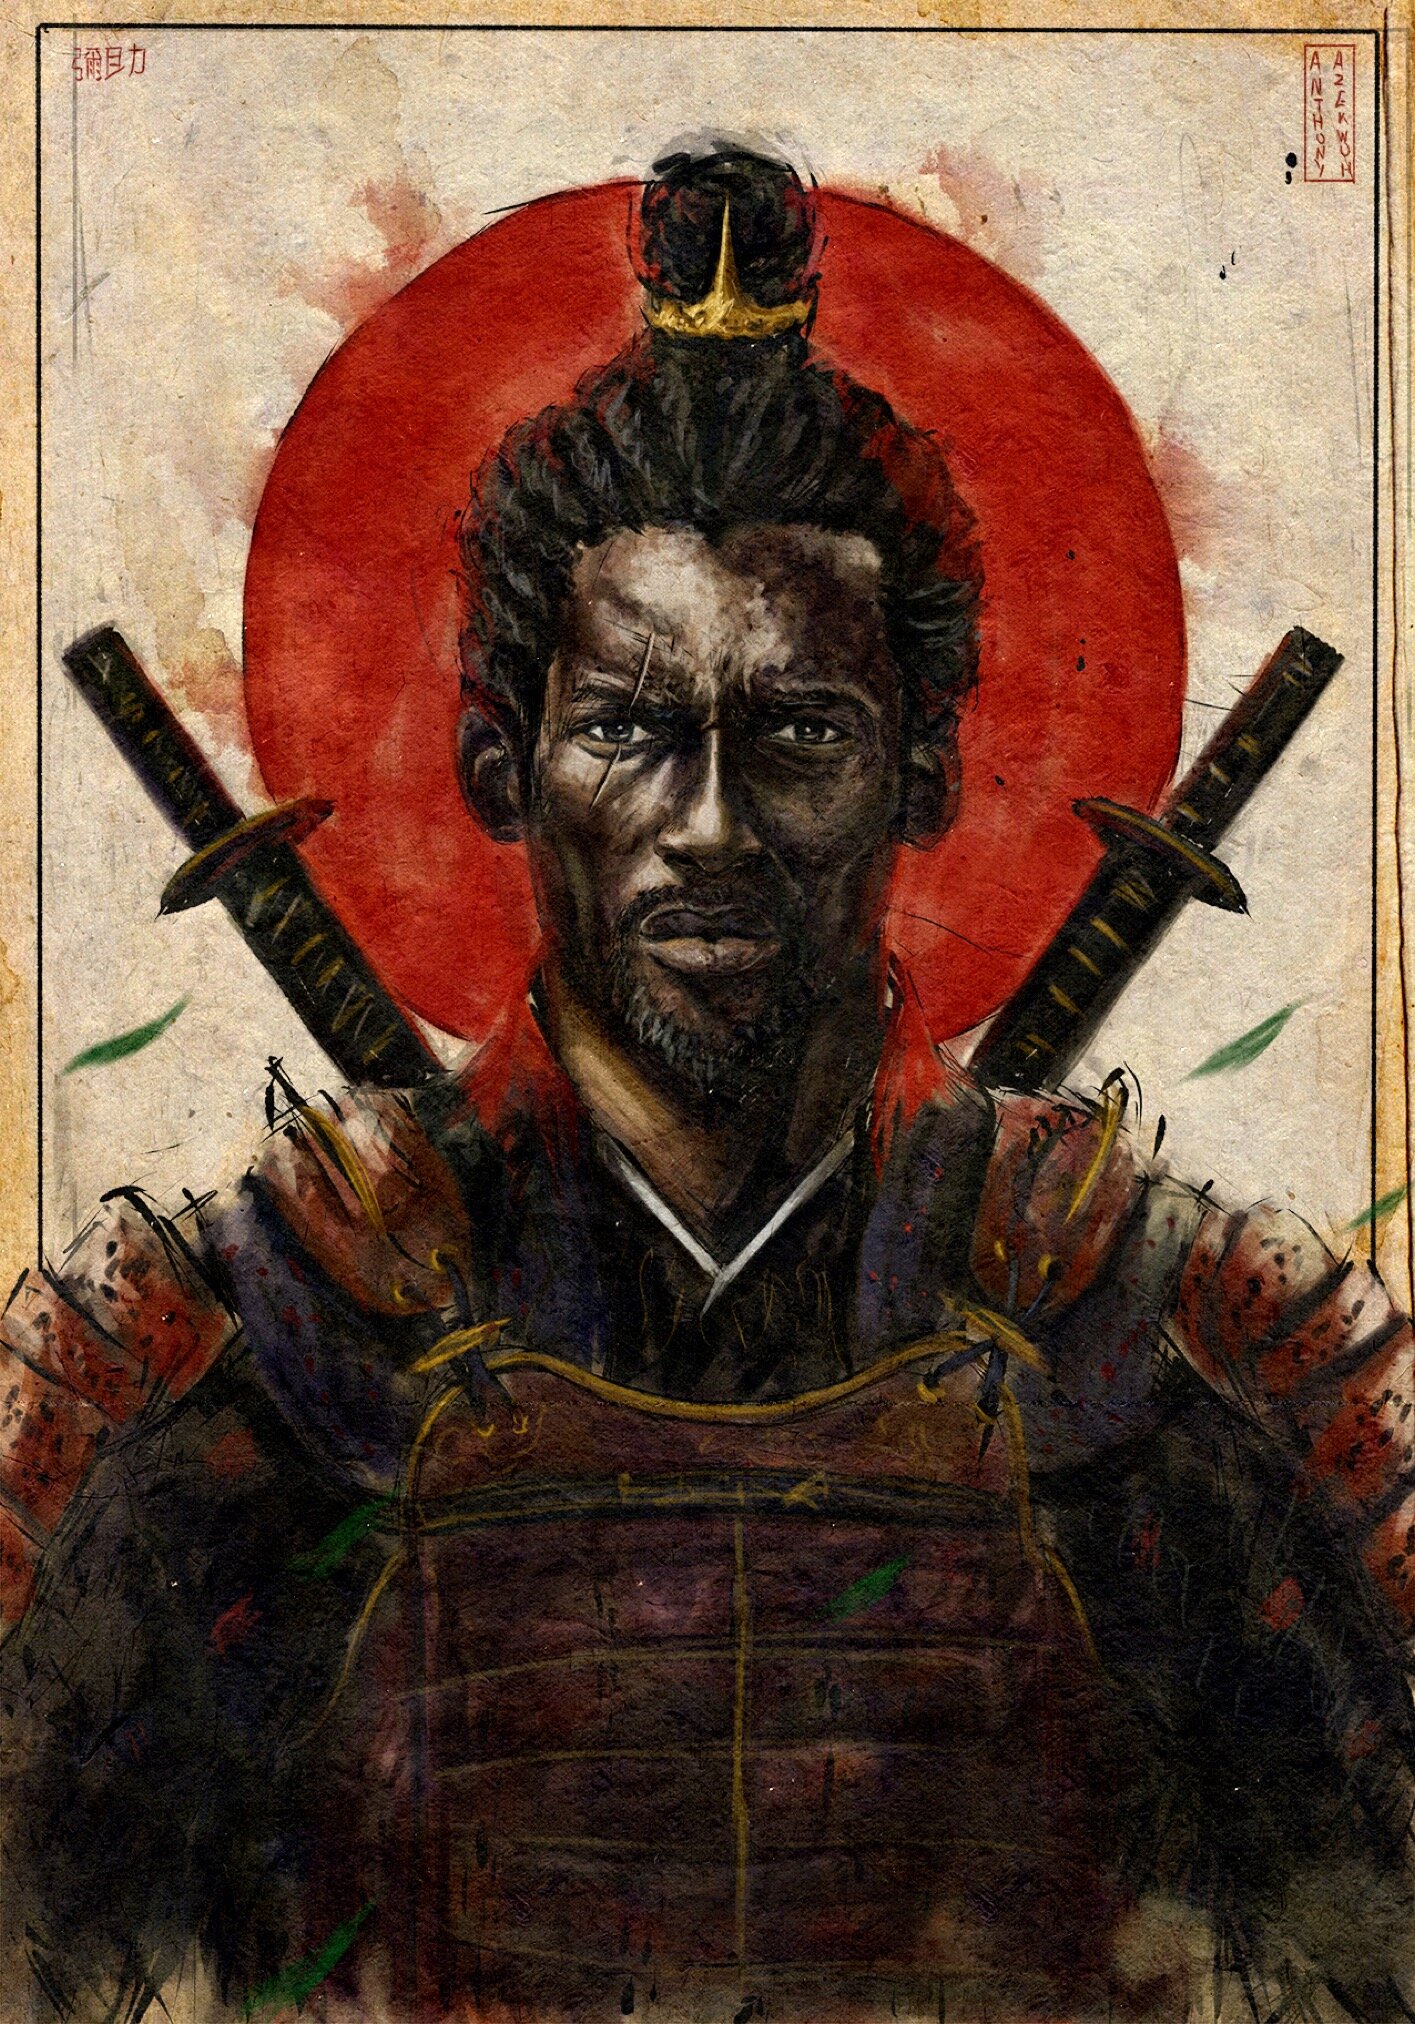 Afro Samurai's Fuminori Kizaki to adapt legendary book No Longer